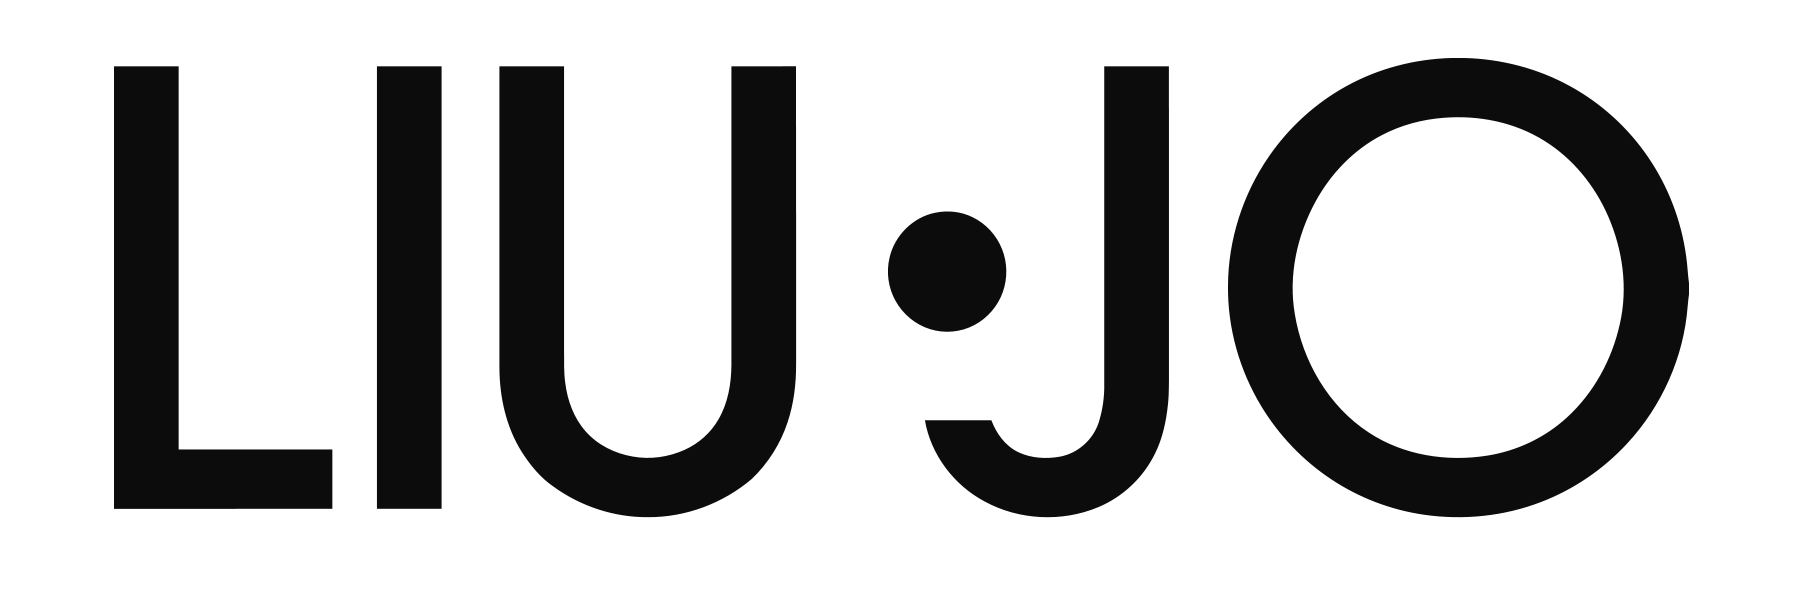 Logo Liu Jo | vlr.eng.br